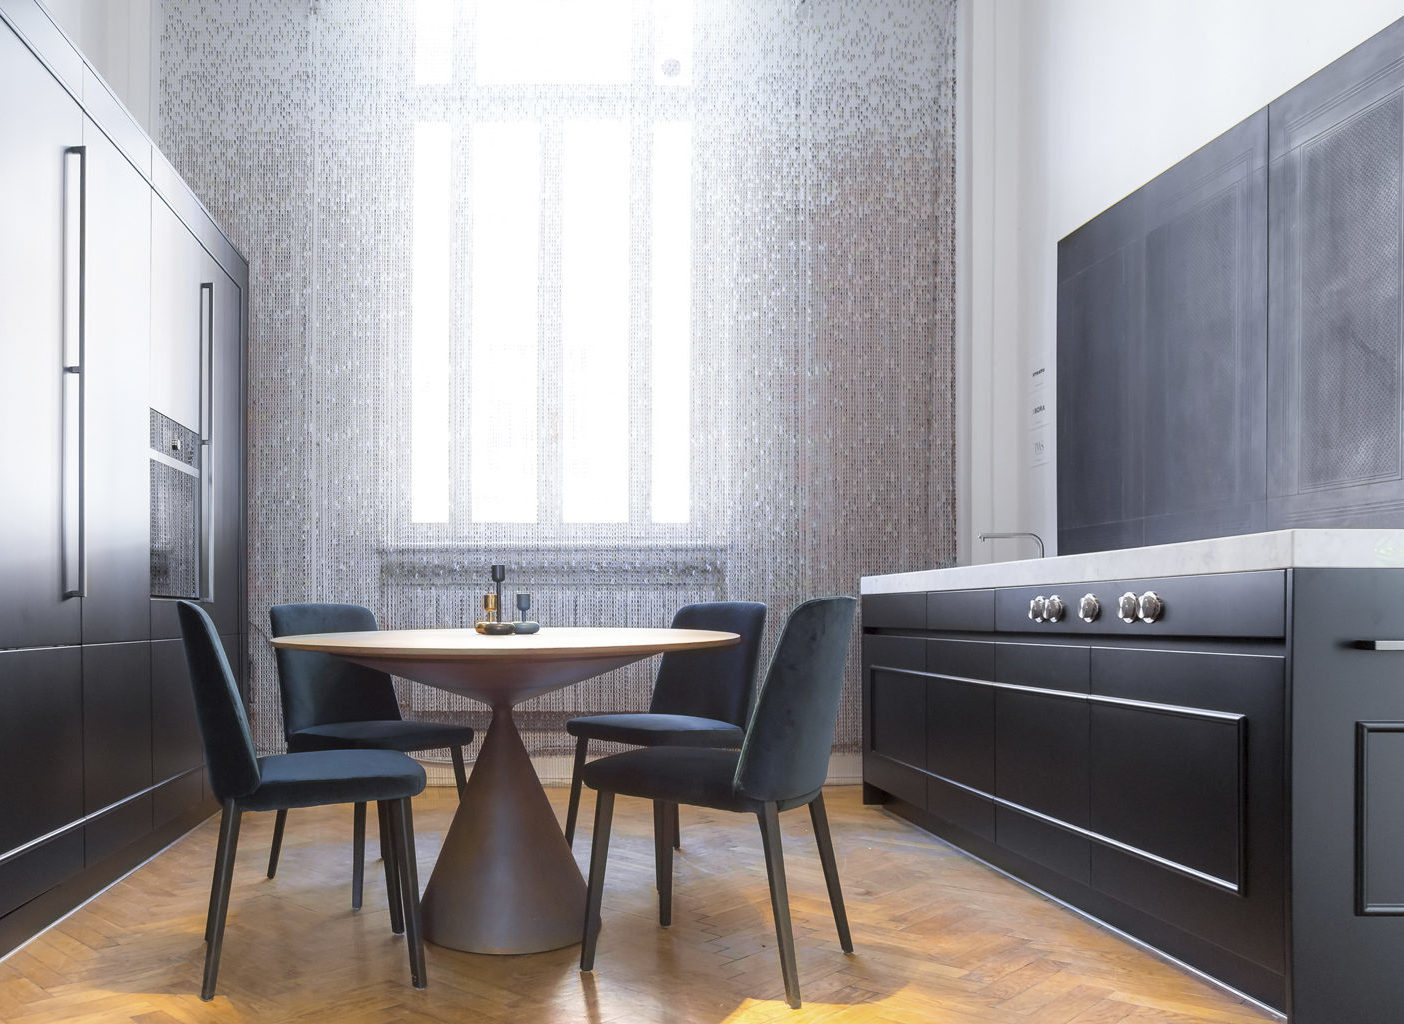 Strato_design_BB4_bespoke kitchen project in Milano_2017_mat lacquer black_01